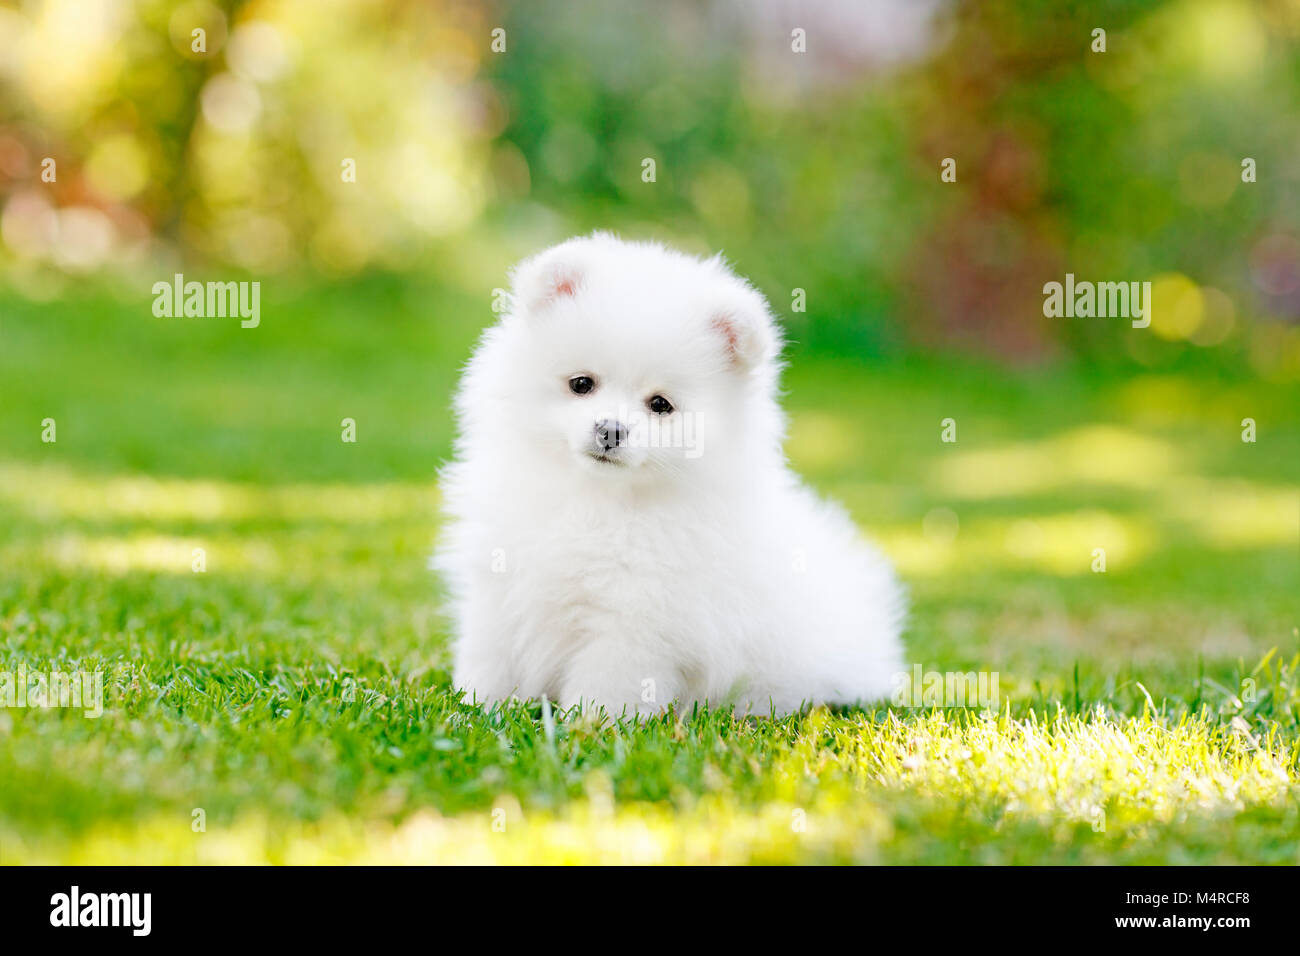 Adorable white Pomeranian puppy spitz. High resolution photo. Stock Photo